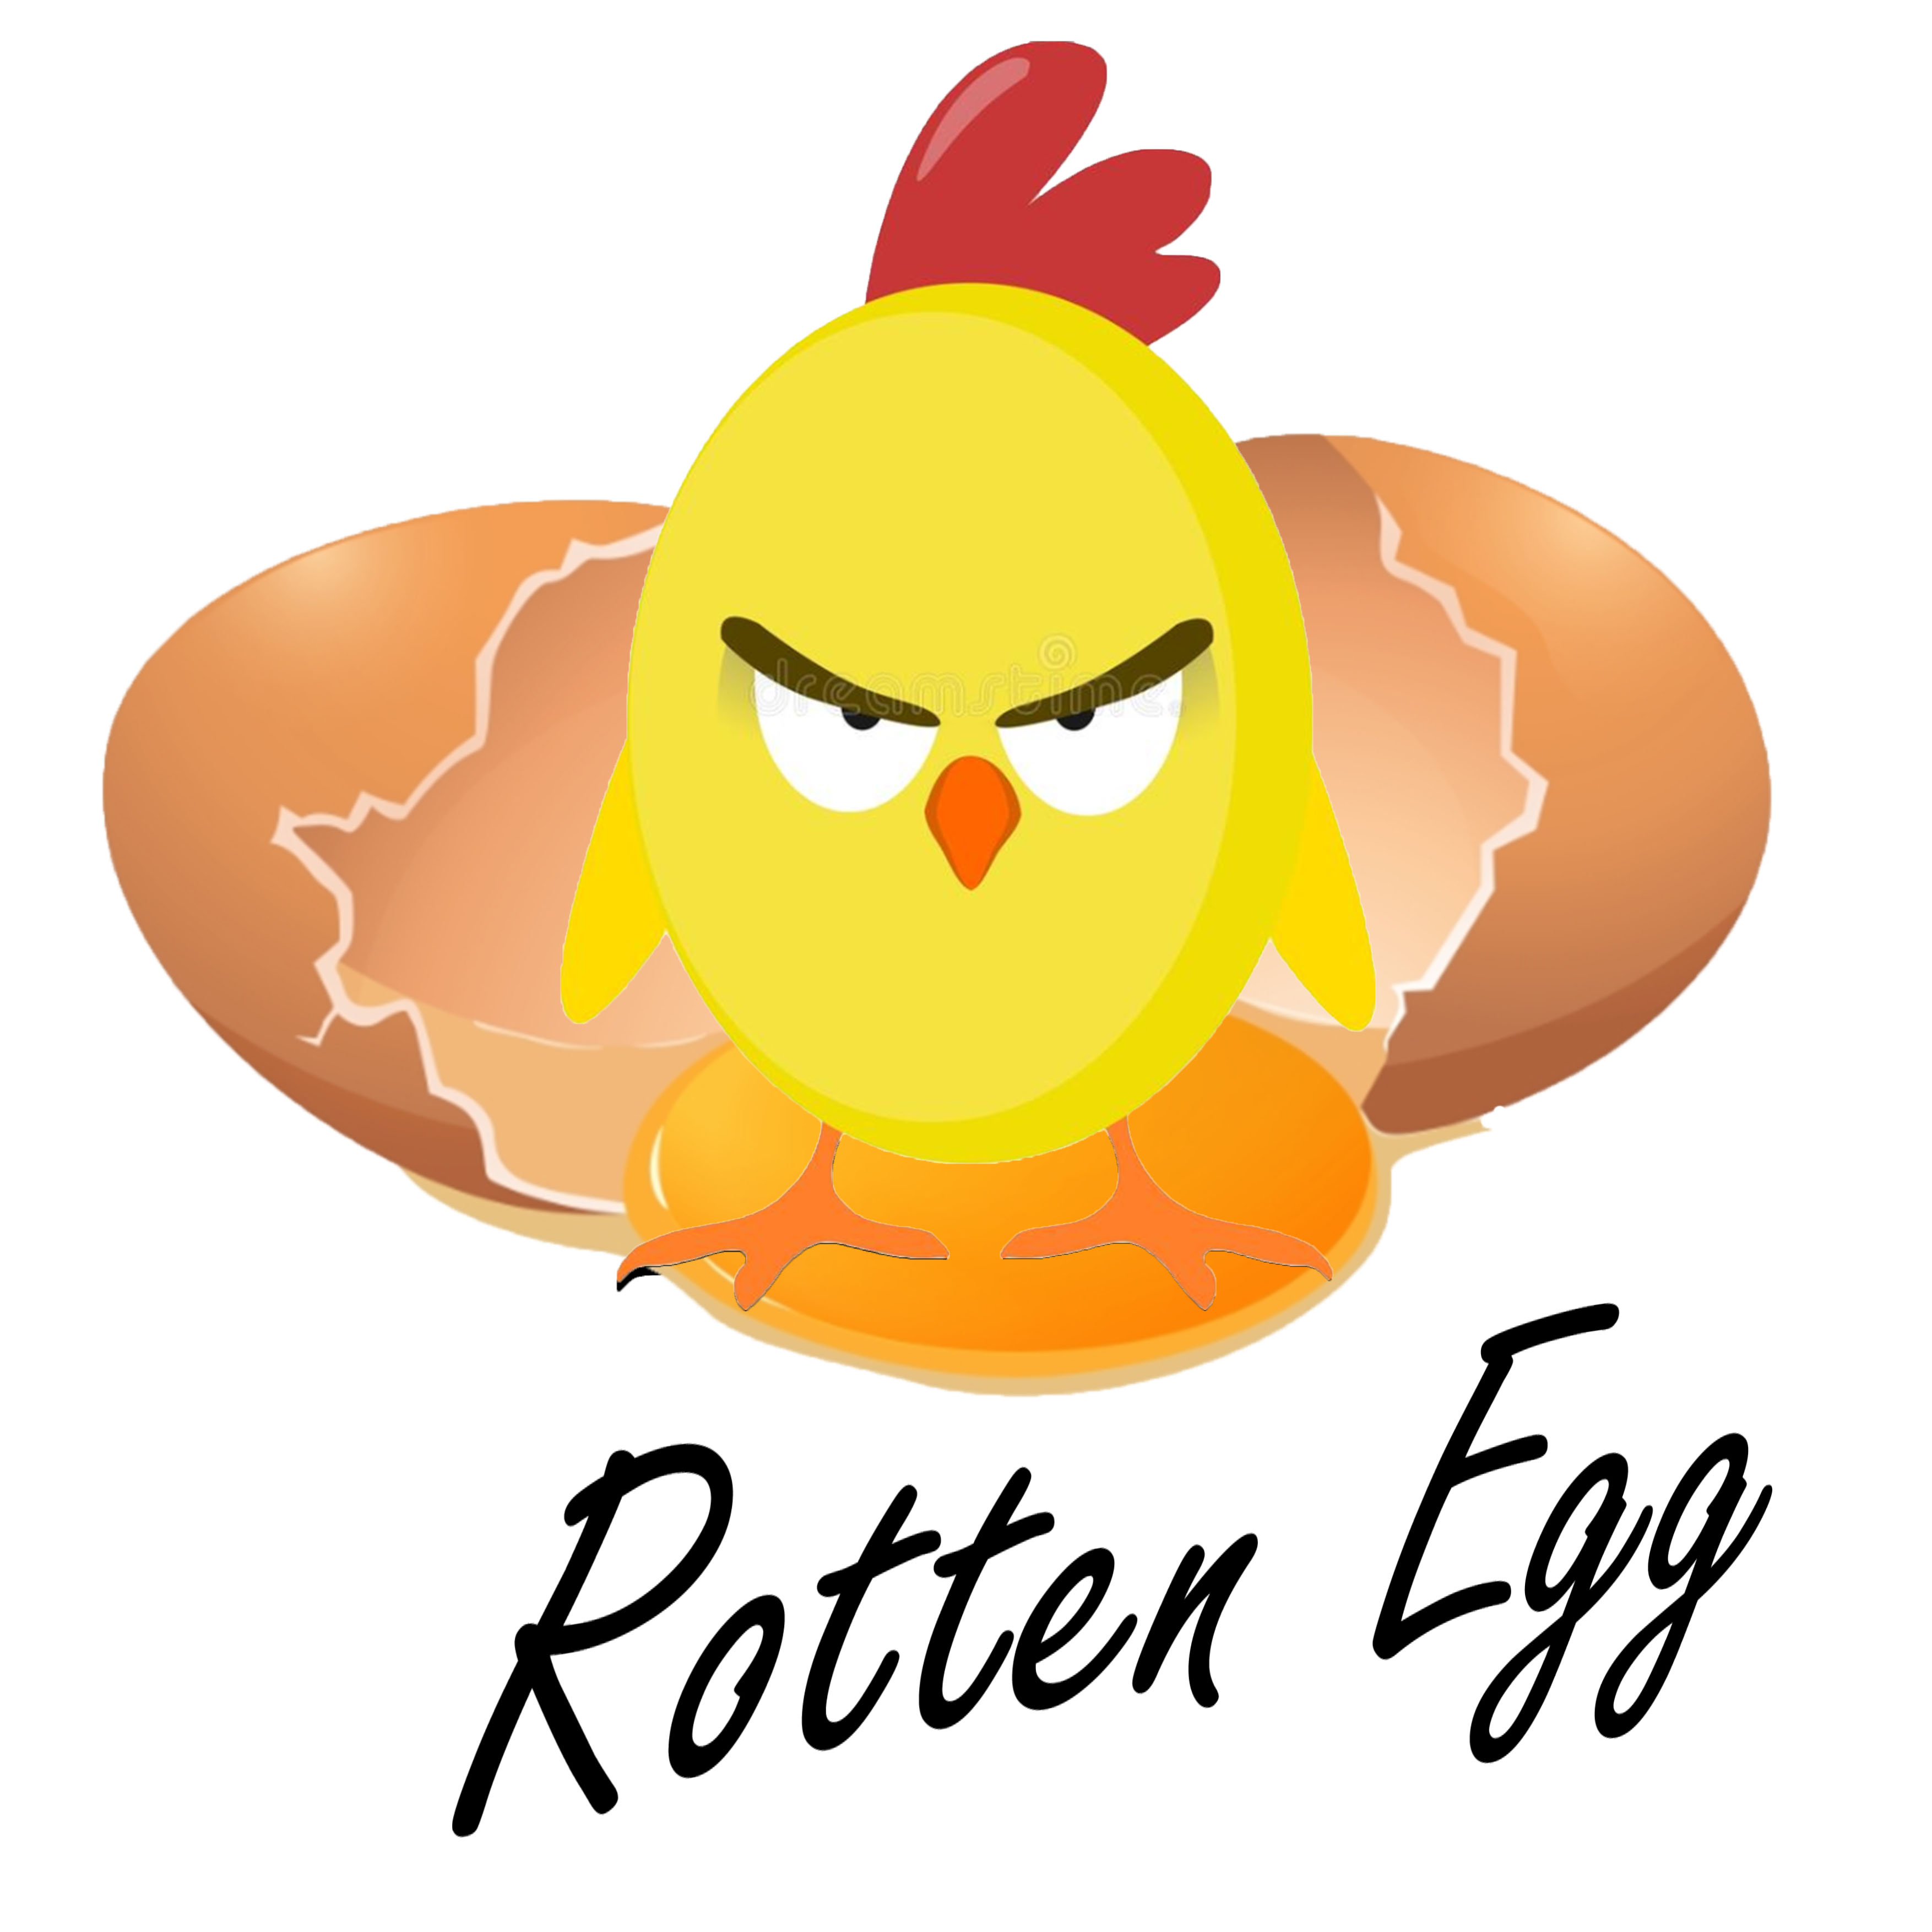 Rotten egg Royalty Free Vector Image - VectorStock